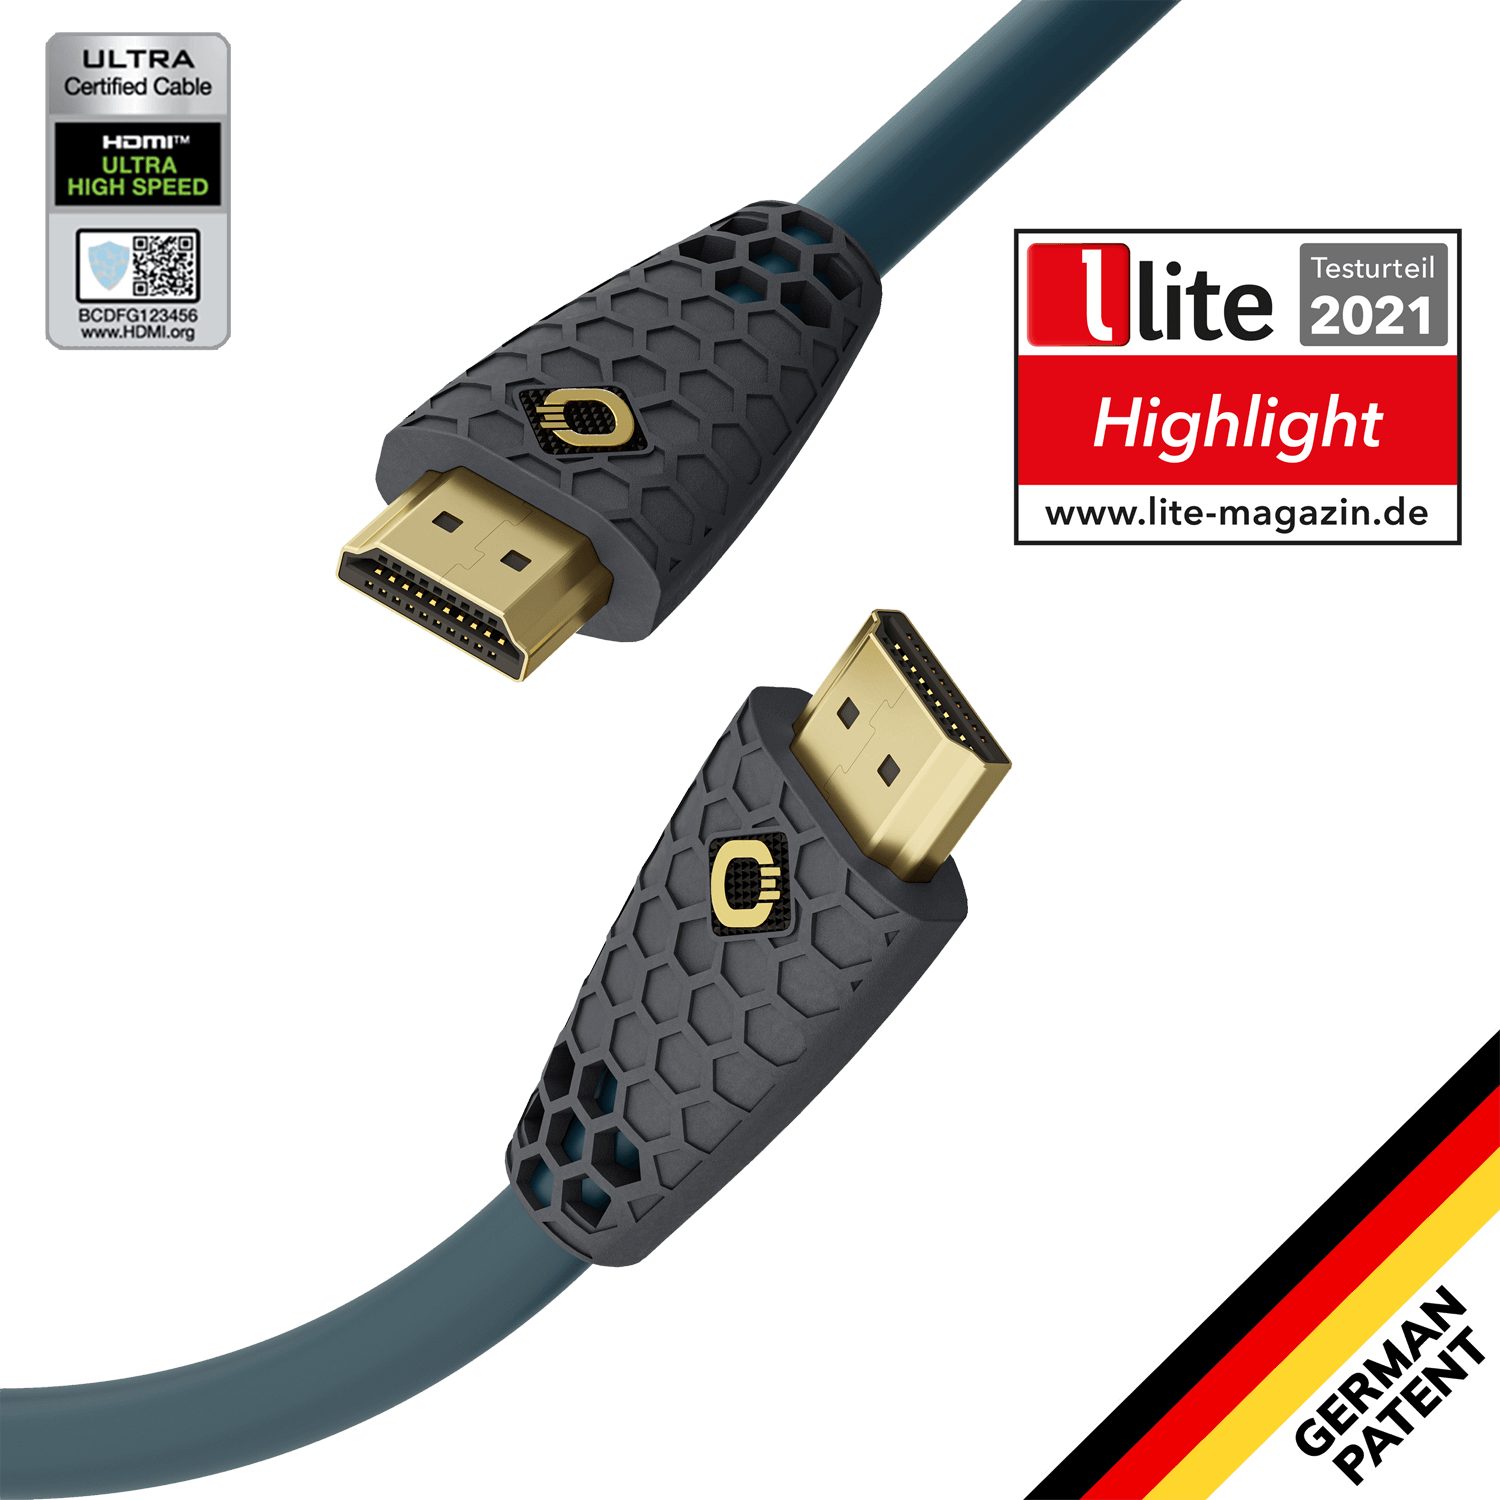 Evolution (100 cm) 8K High-Speed Flex HDMI-Kabel, - Kabel Oehlbach HDMI, HDMI HDMI® Ultra